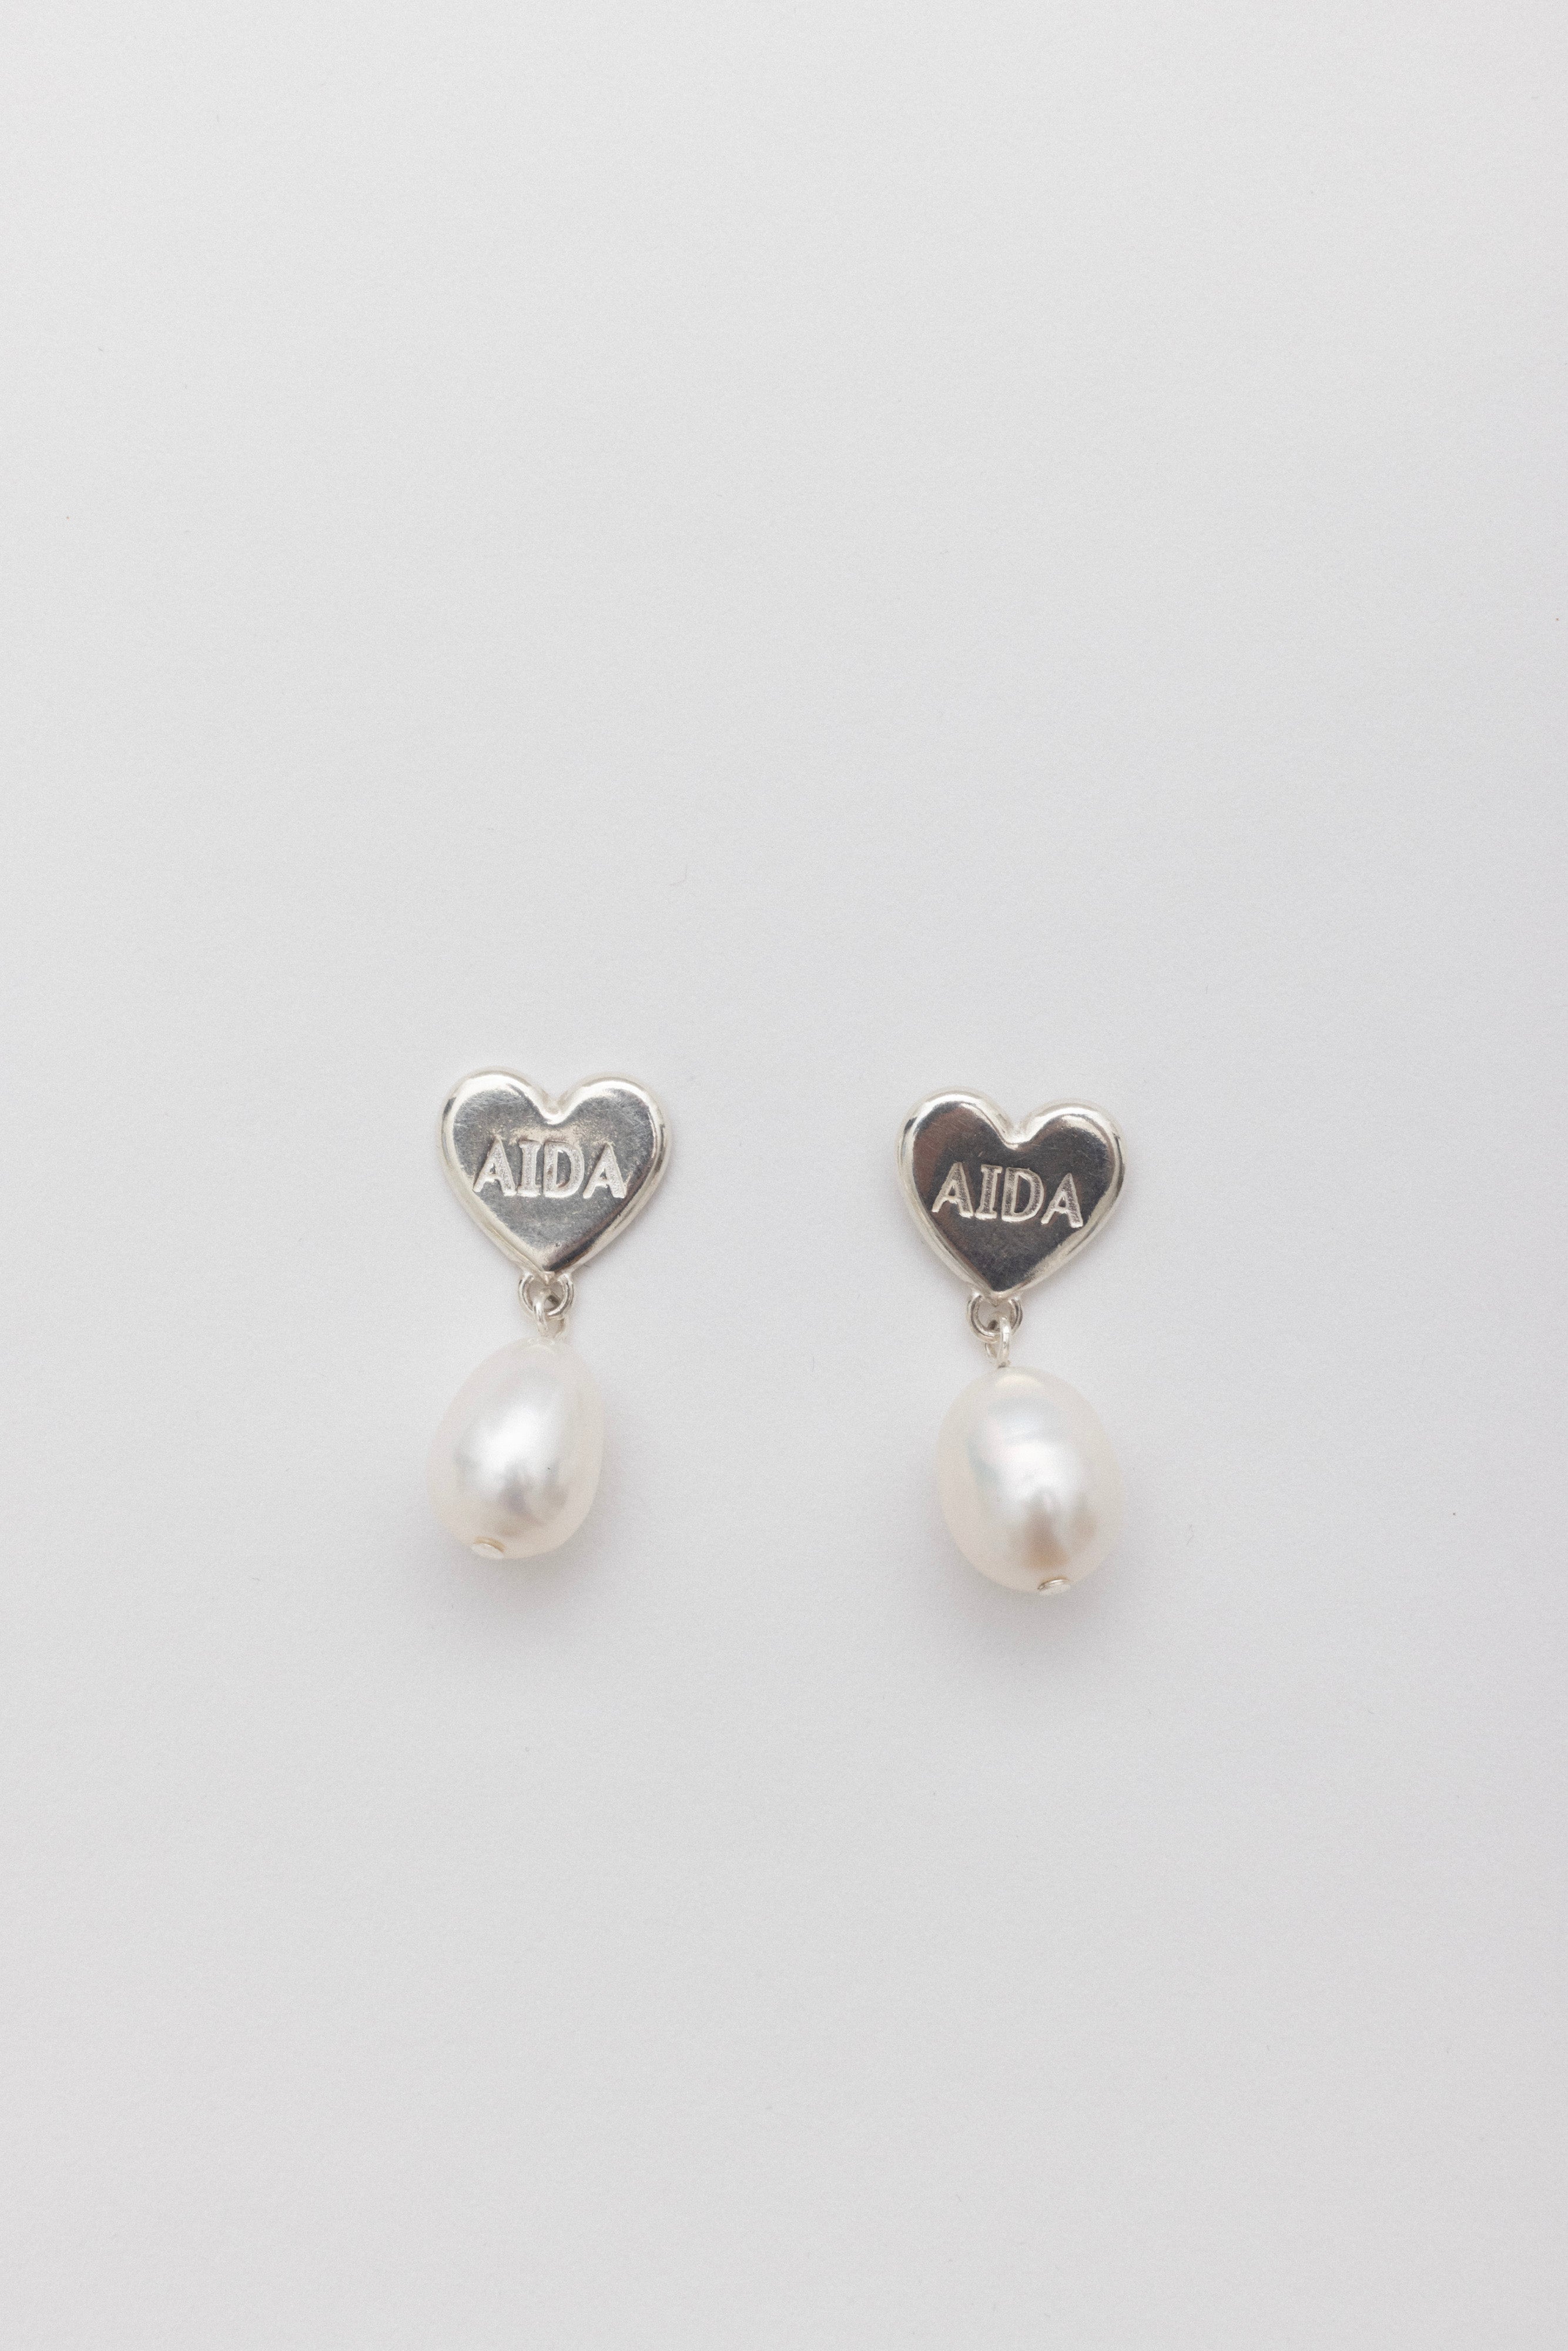 Aida Heart Pearl Earrings Silver